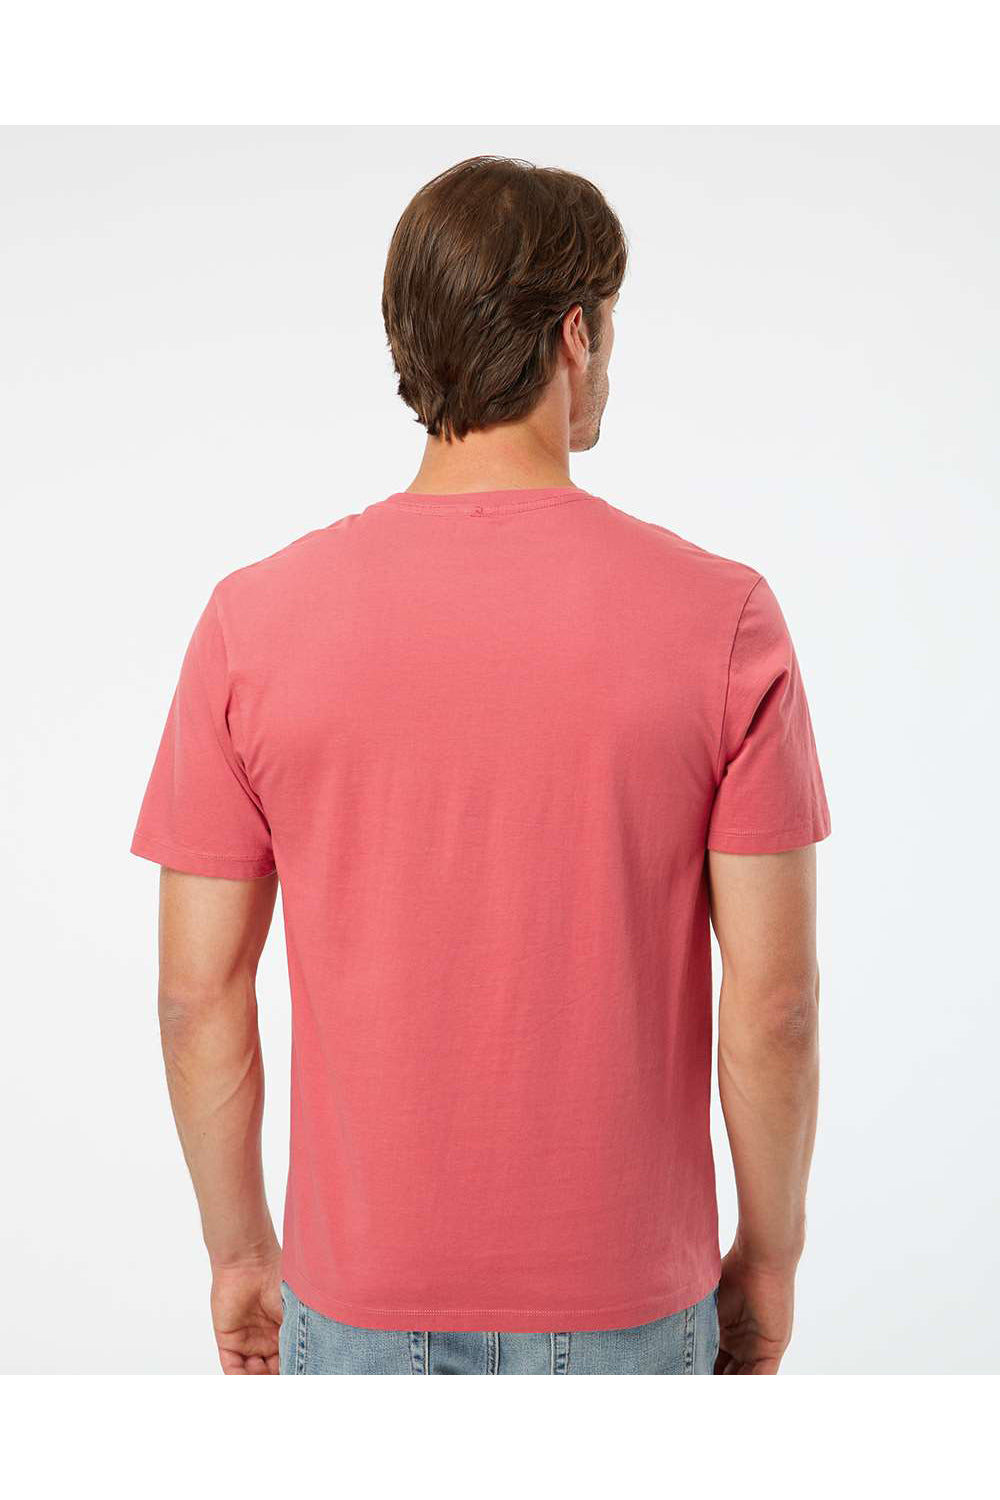 SoftShirts 400 Mens Organic Short Sleeve Crewneck T-Shirt Brick Model Back